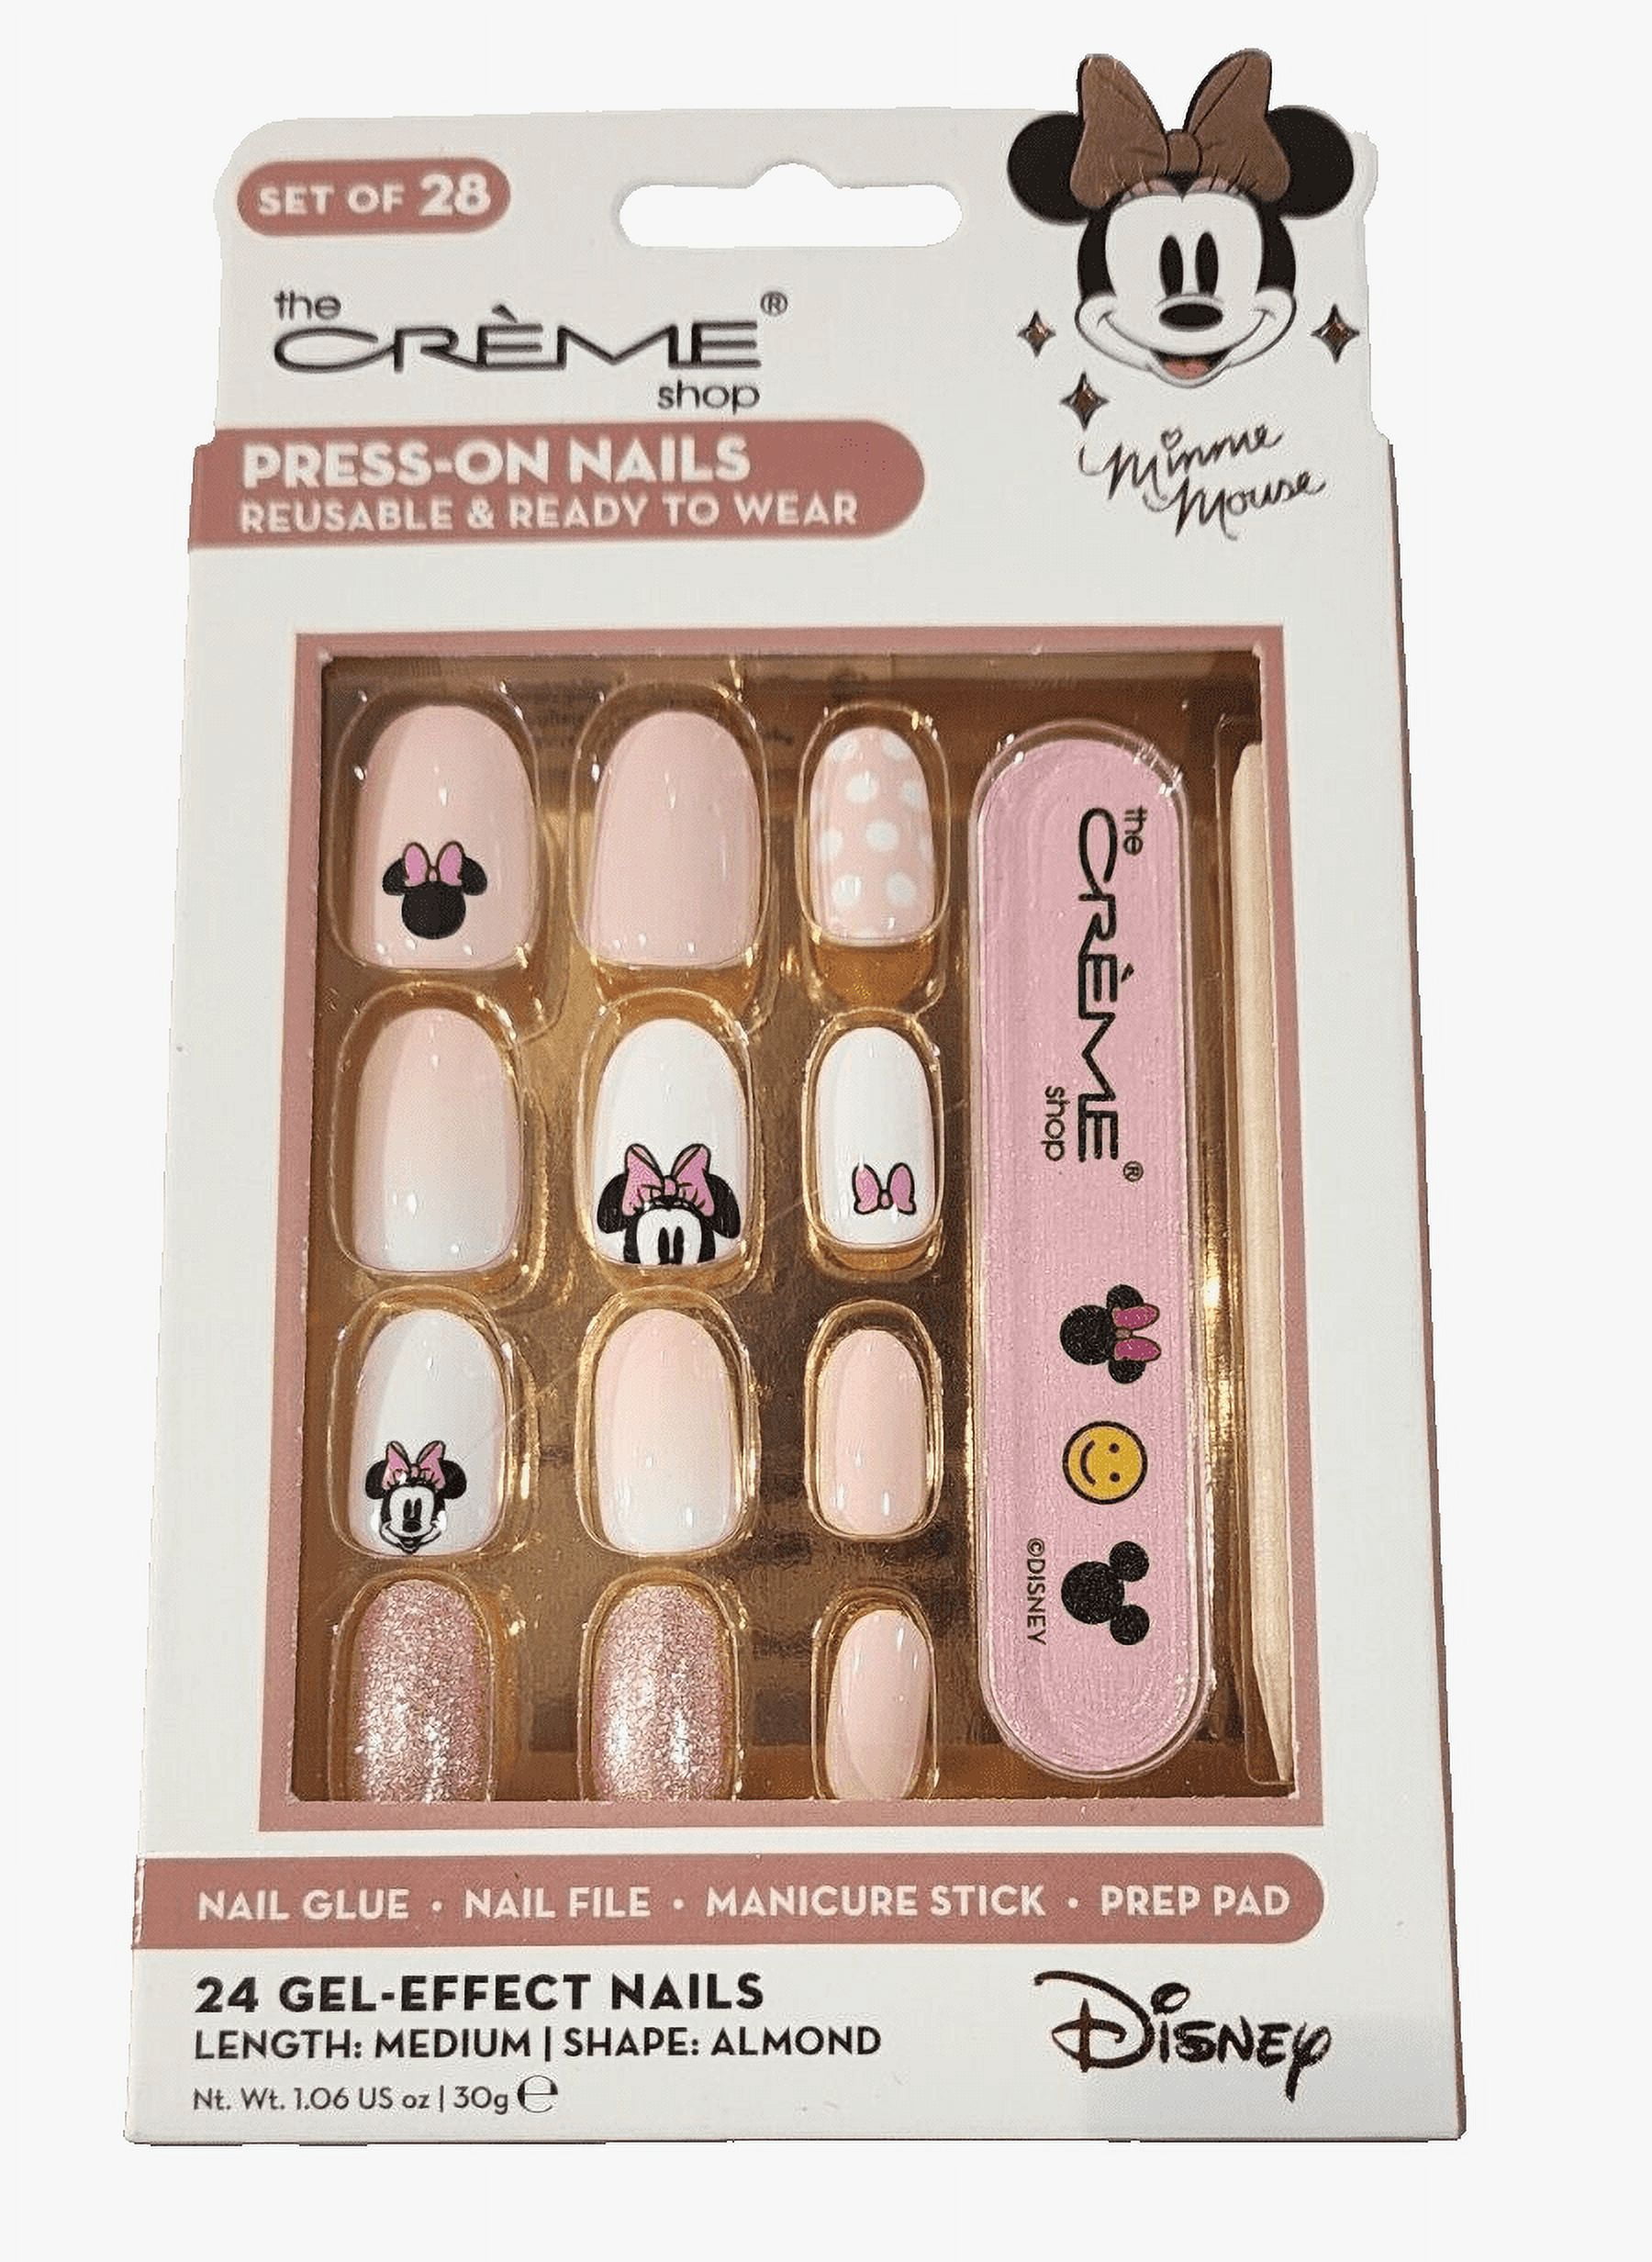 The Creme Shop Minnie Mouse Nail Decal + Polish Set